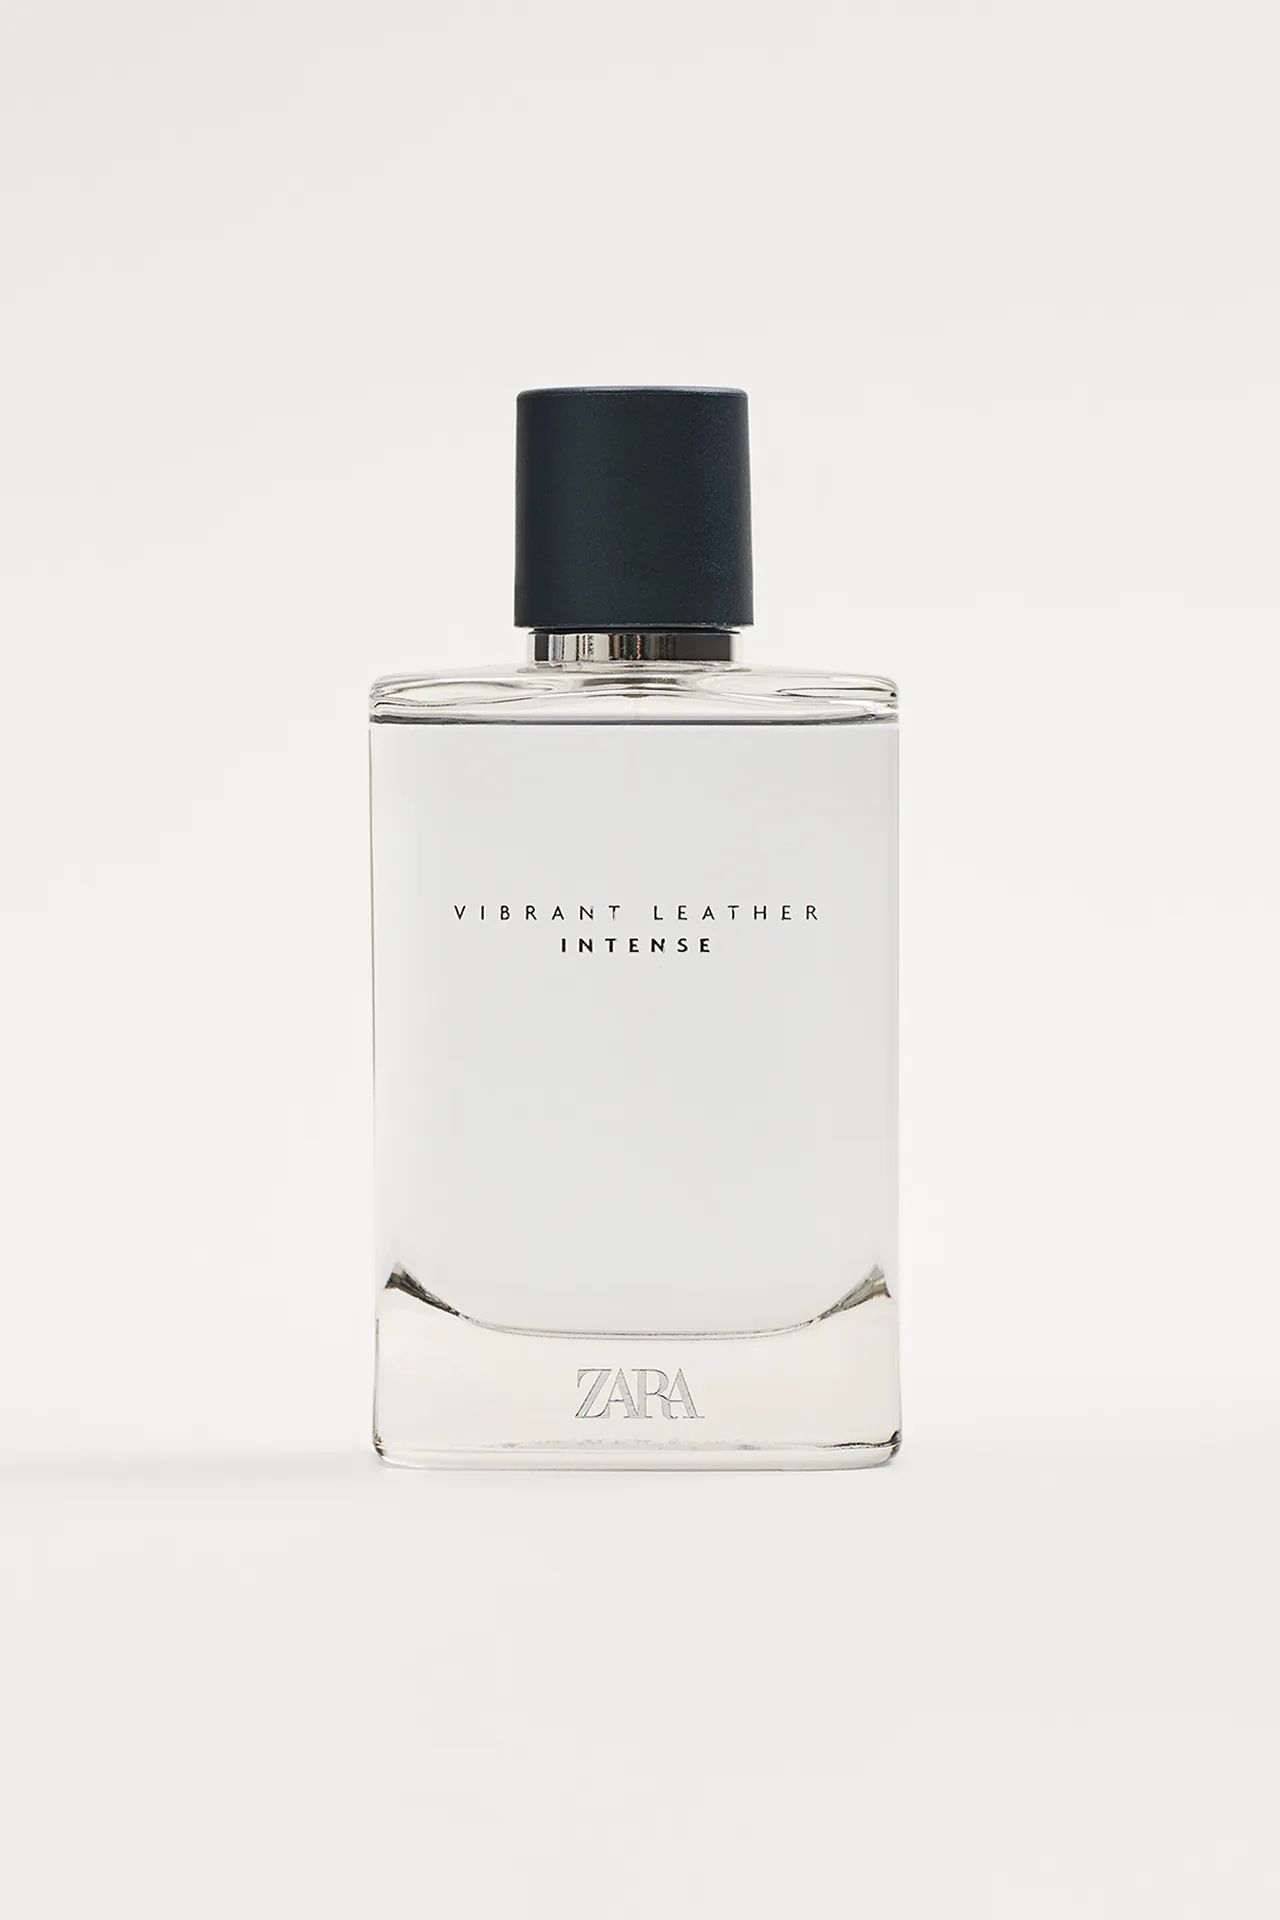 Vibrant Leather Intense Zara cologne - a fragrance for men 2021